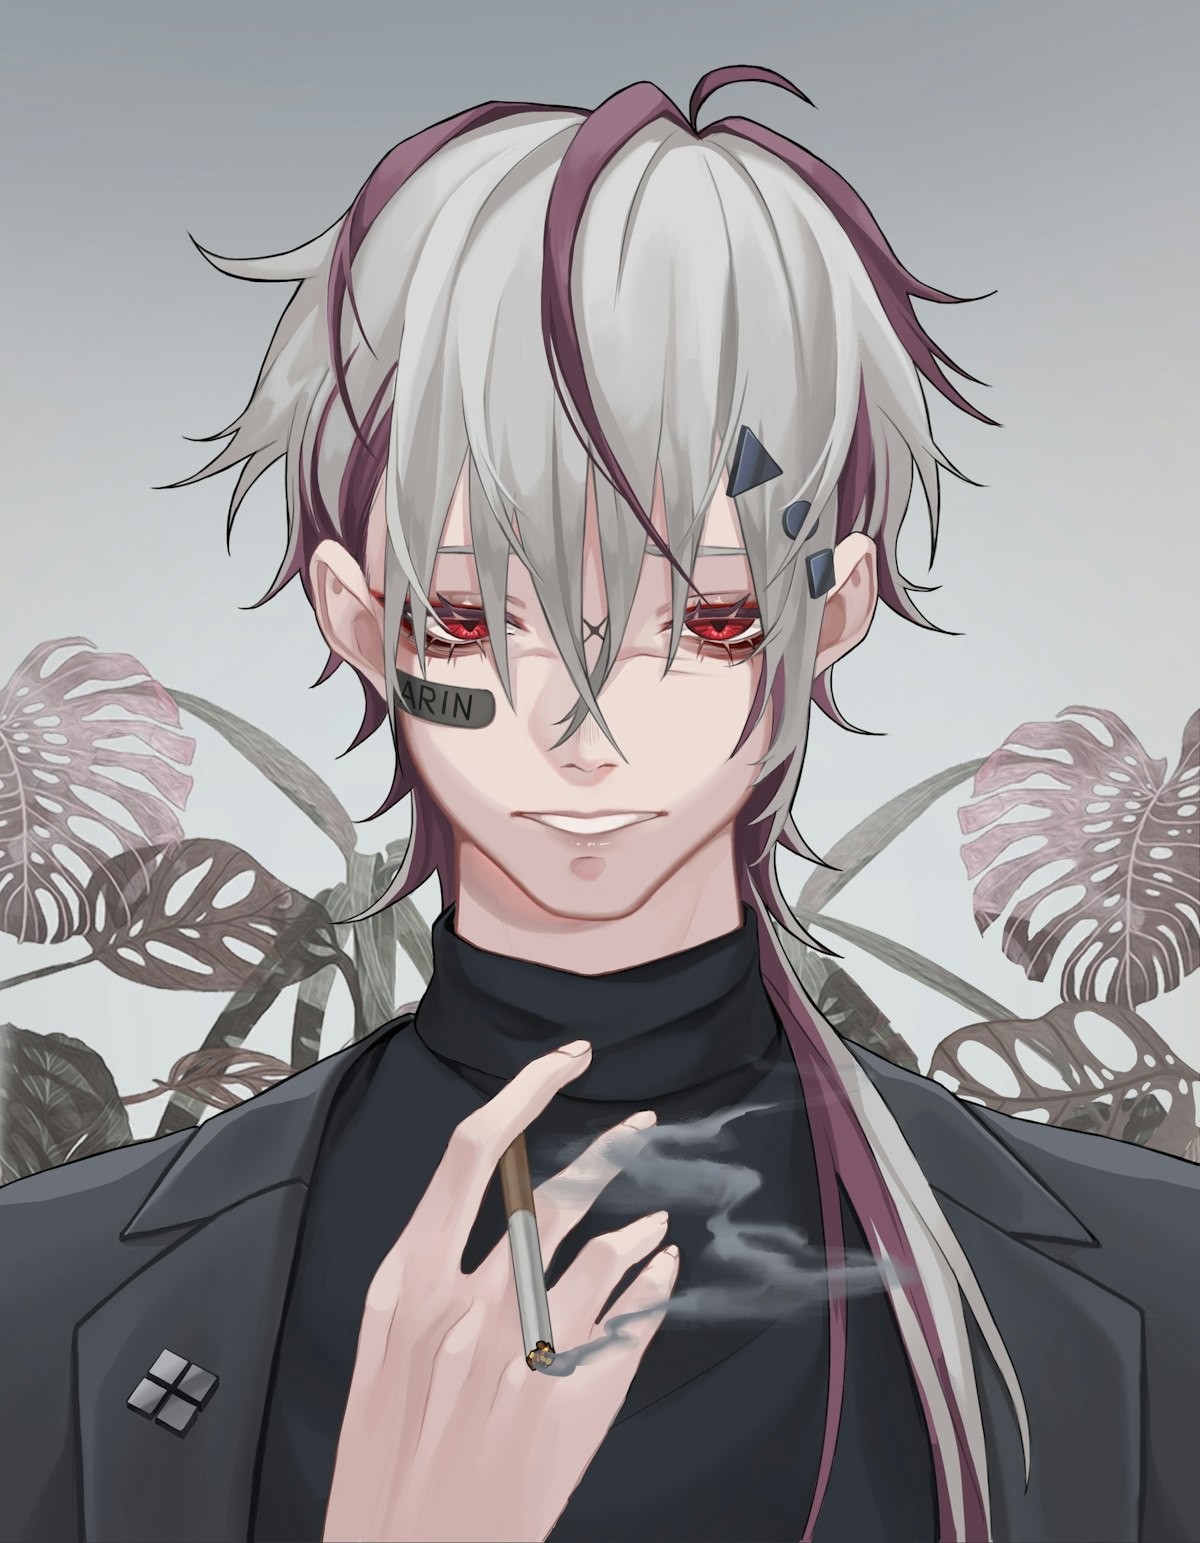 anime vampire boy with white hair